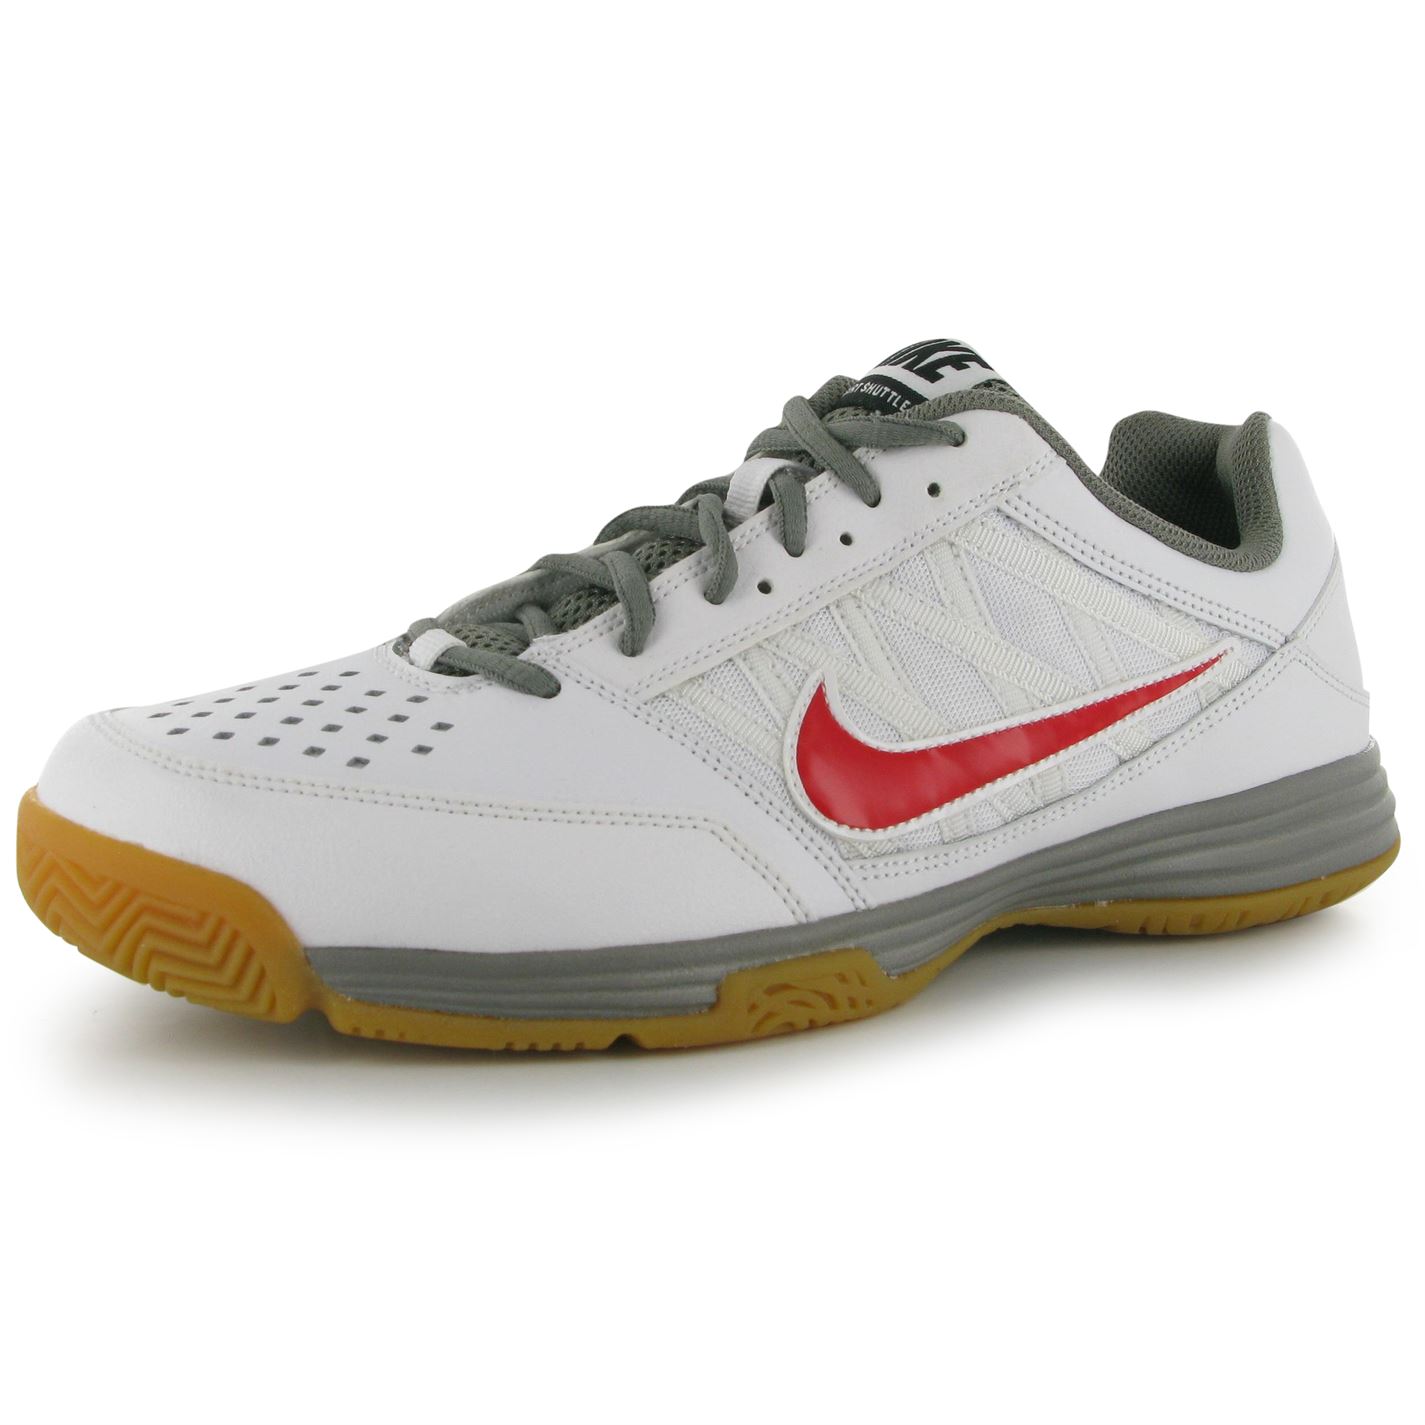 Nike Court Shuttle V Mens Tennis Shoes - Lillywhites